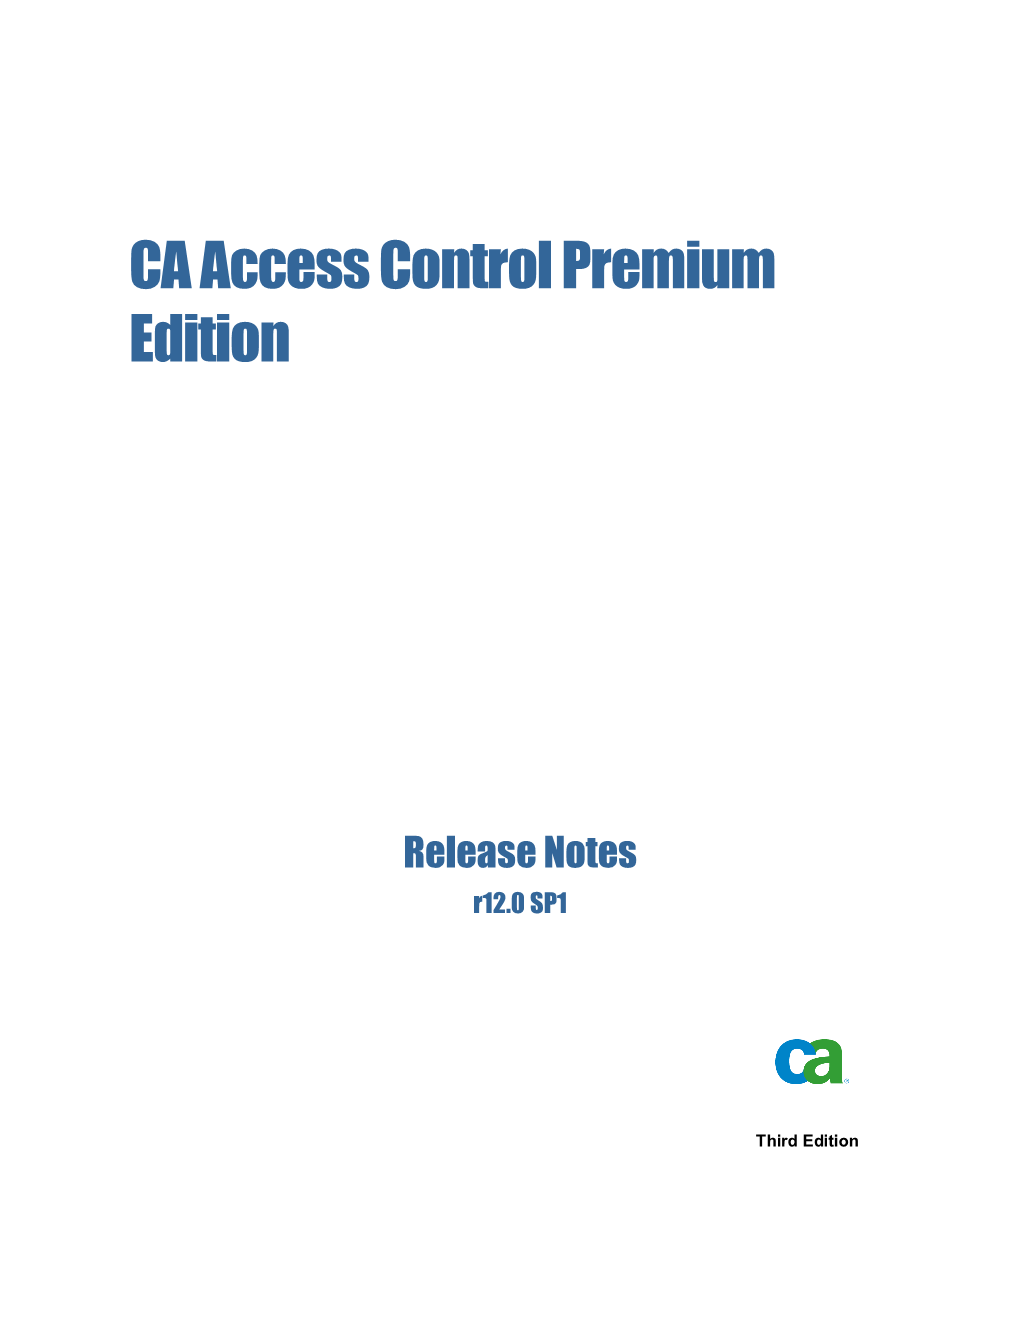 CA Access Control Premium Edition Release Notes